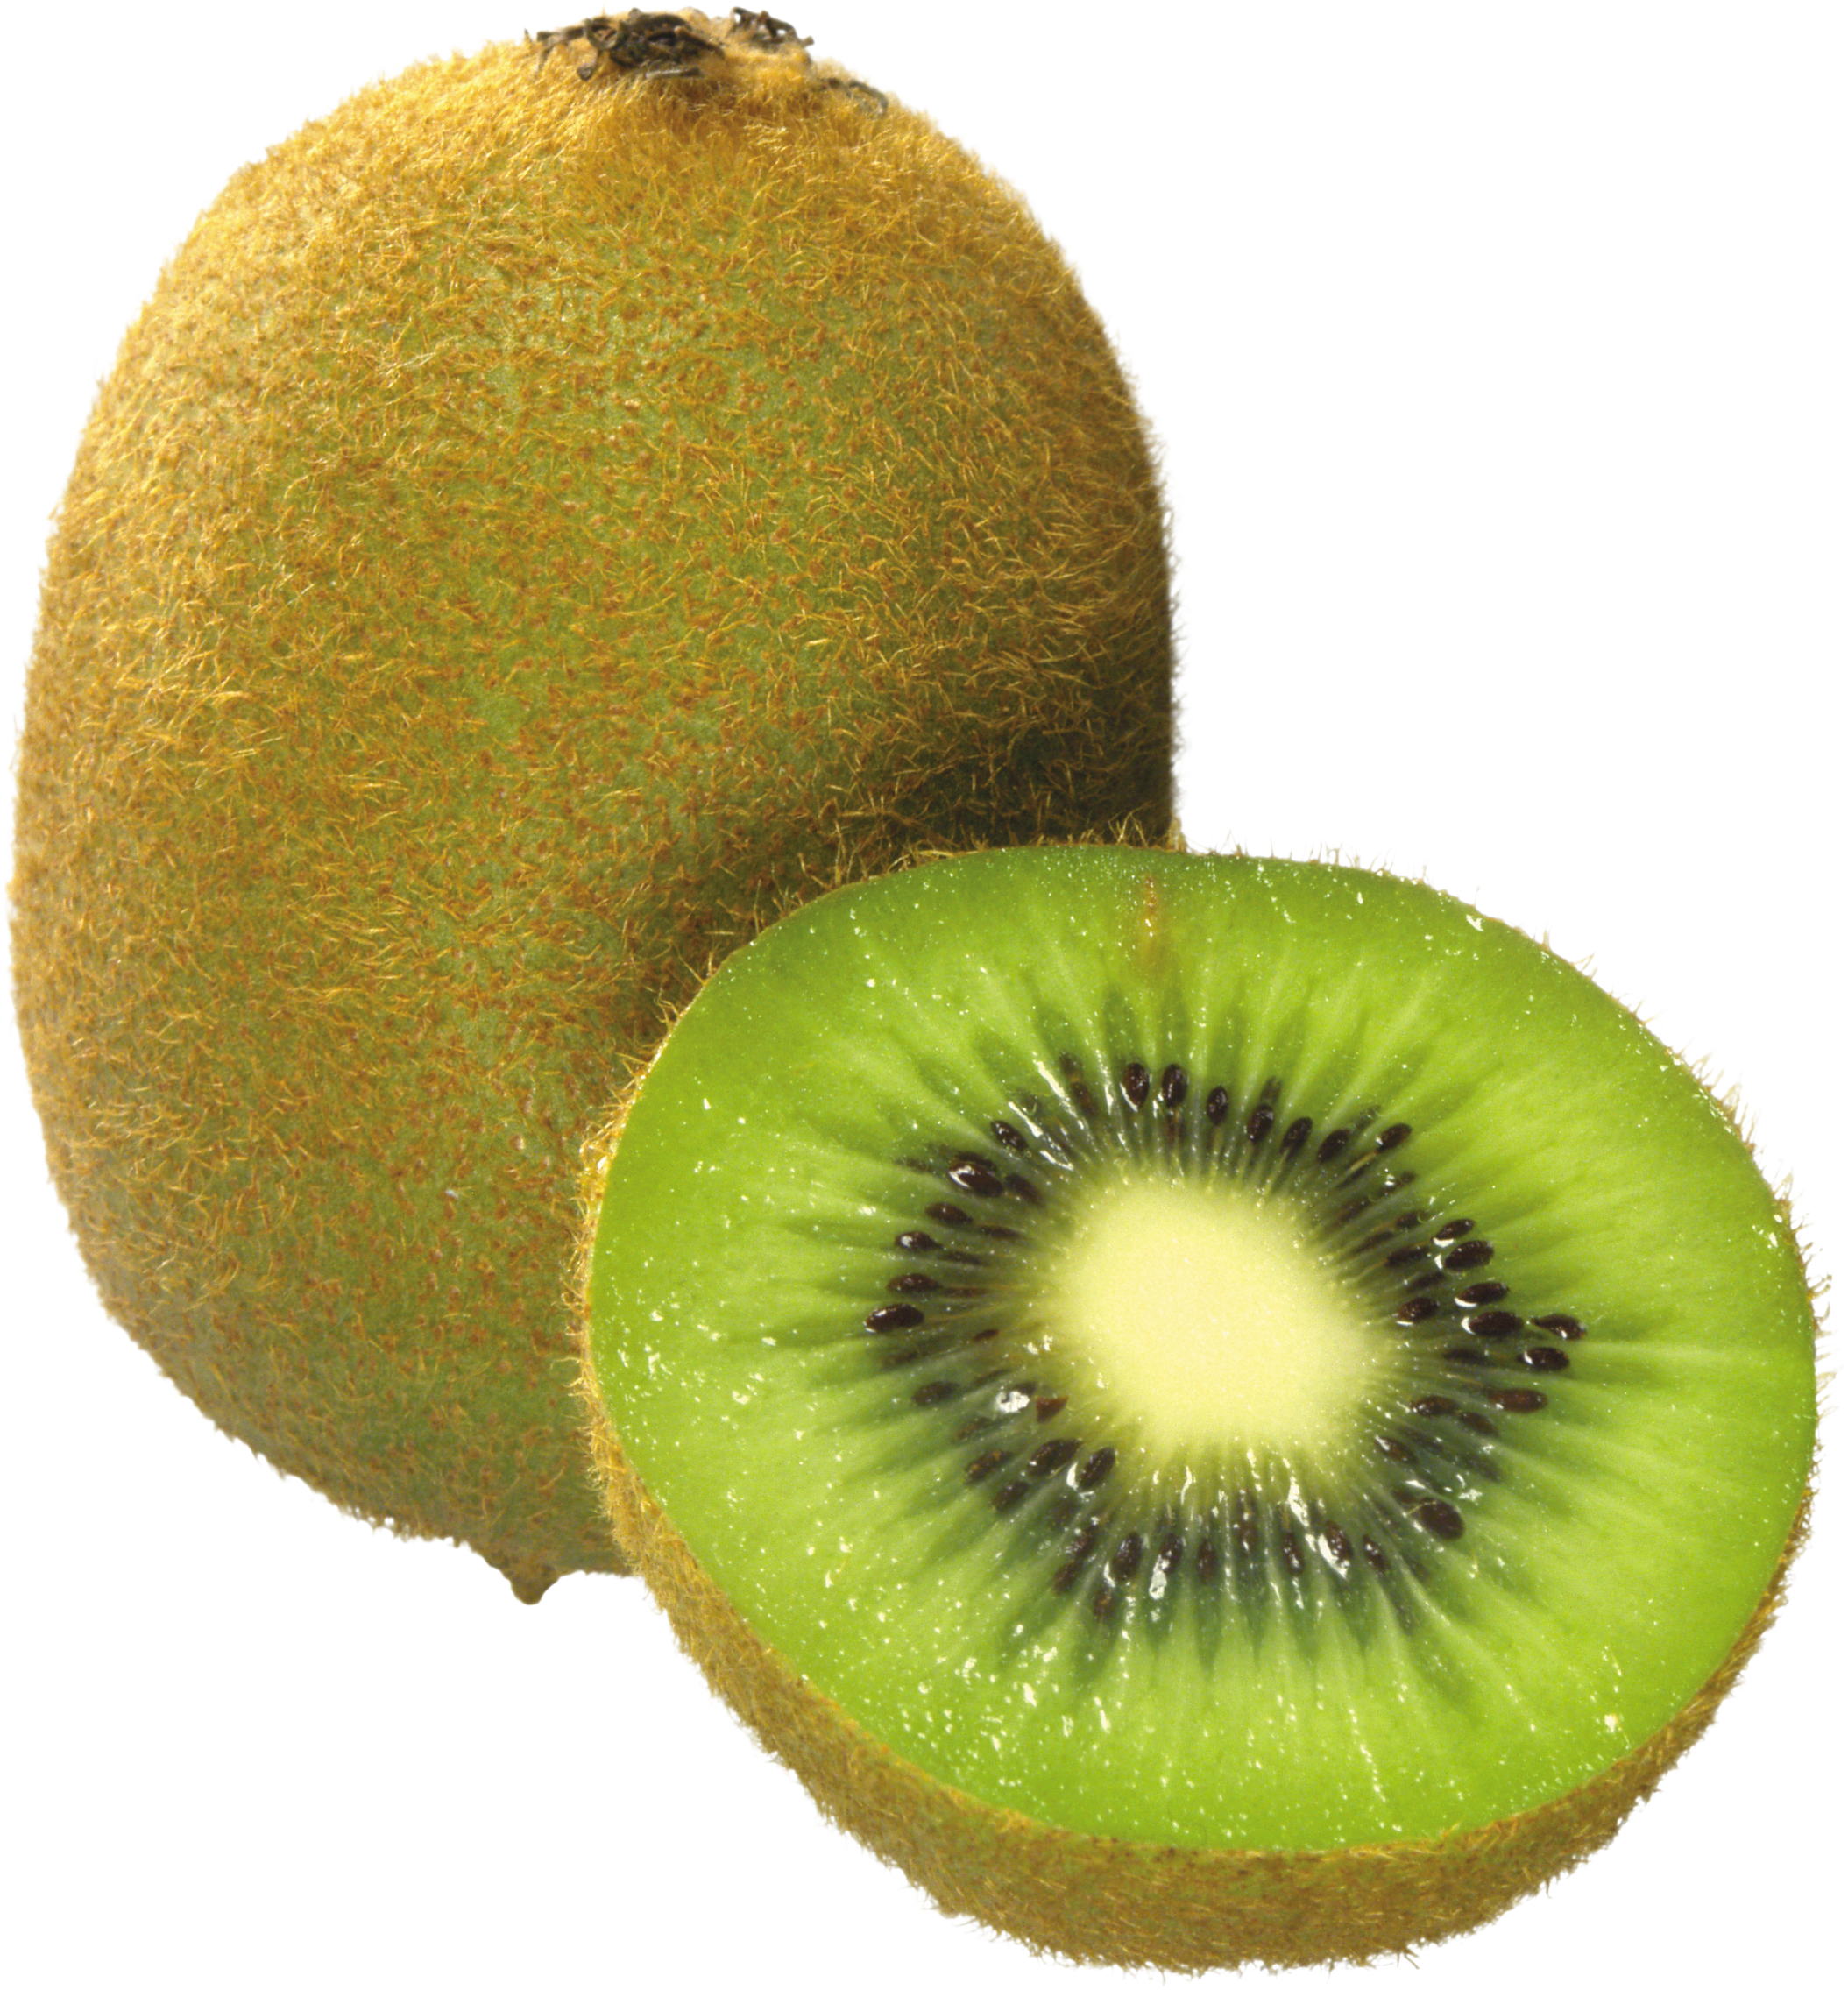 Kiwi Png Image, Free Fruit Kiwi Png Pictures Download - Kiwi, Transparent background PNG HD thumbnail